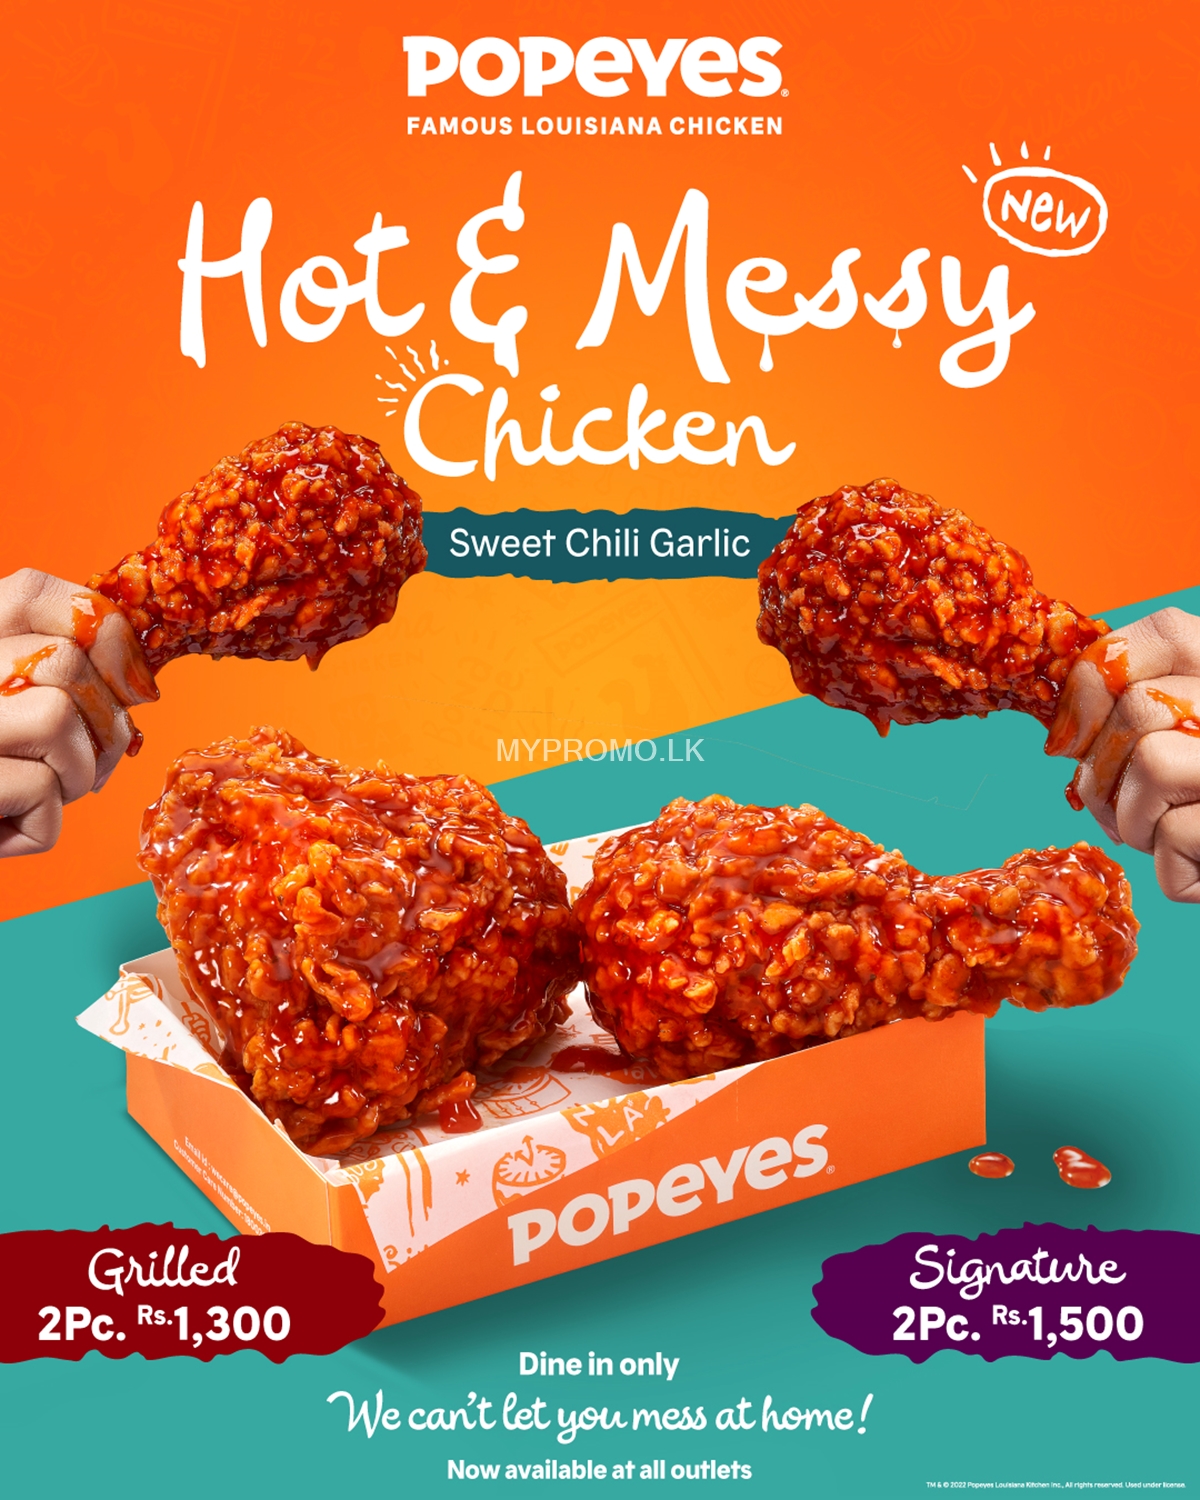 Hot & Messy Chicken at Popeyes